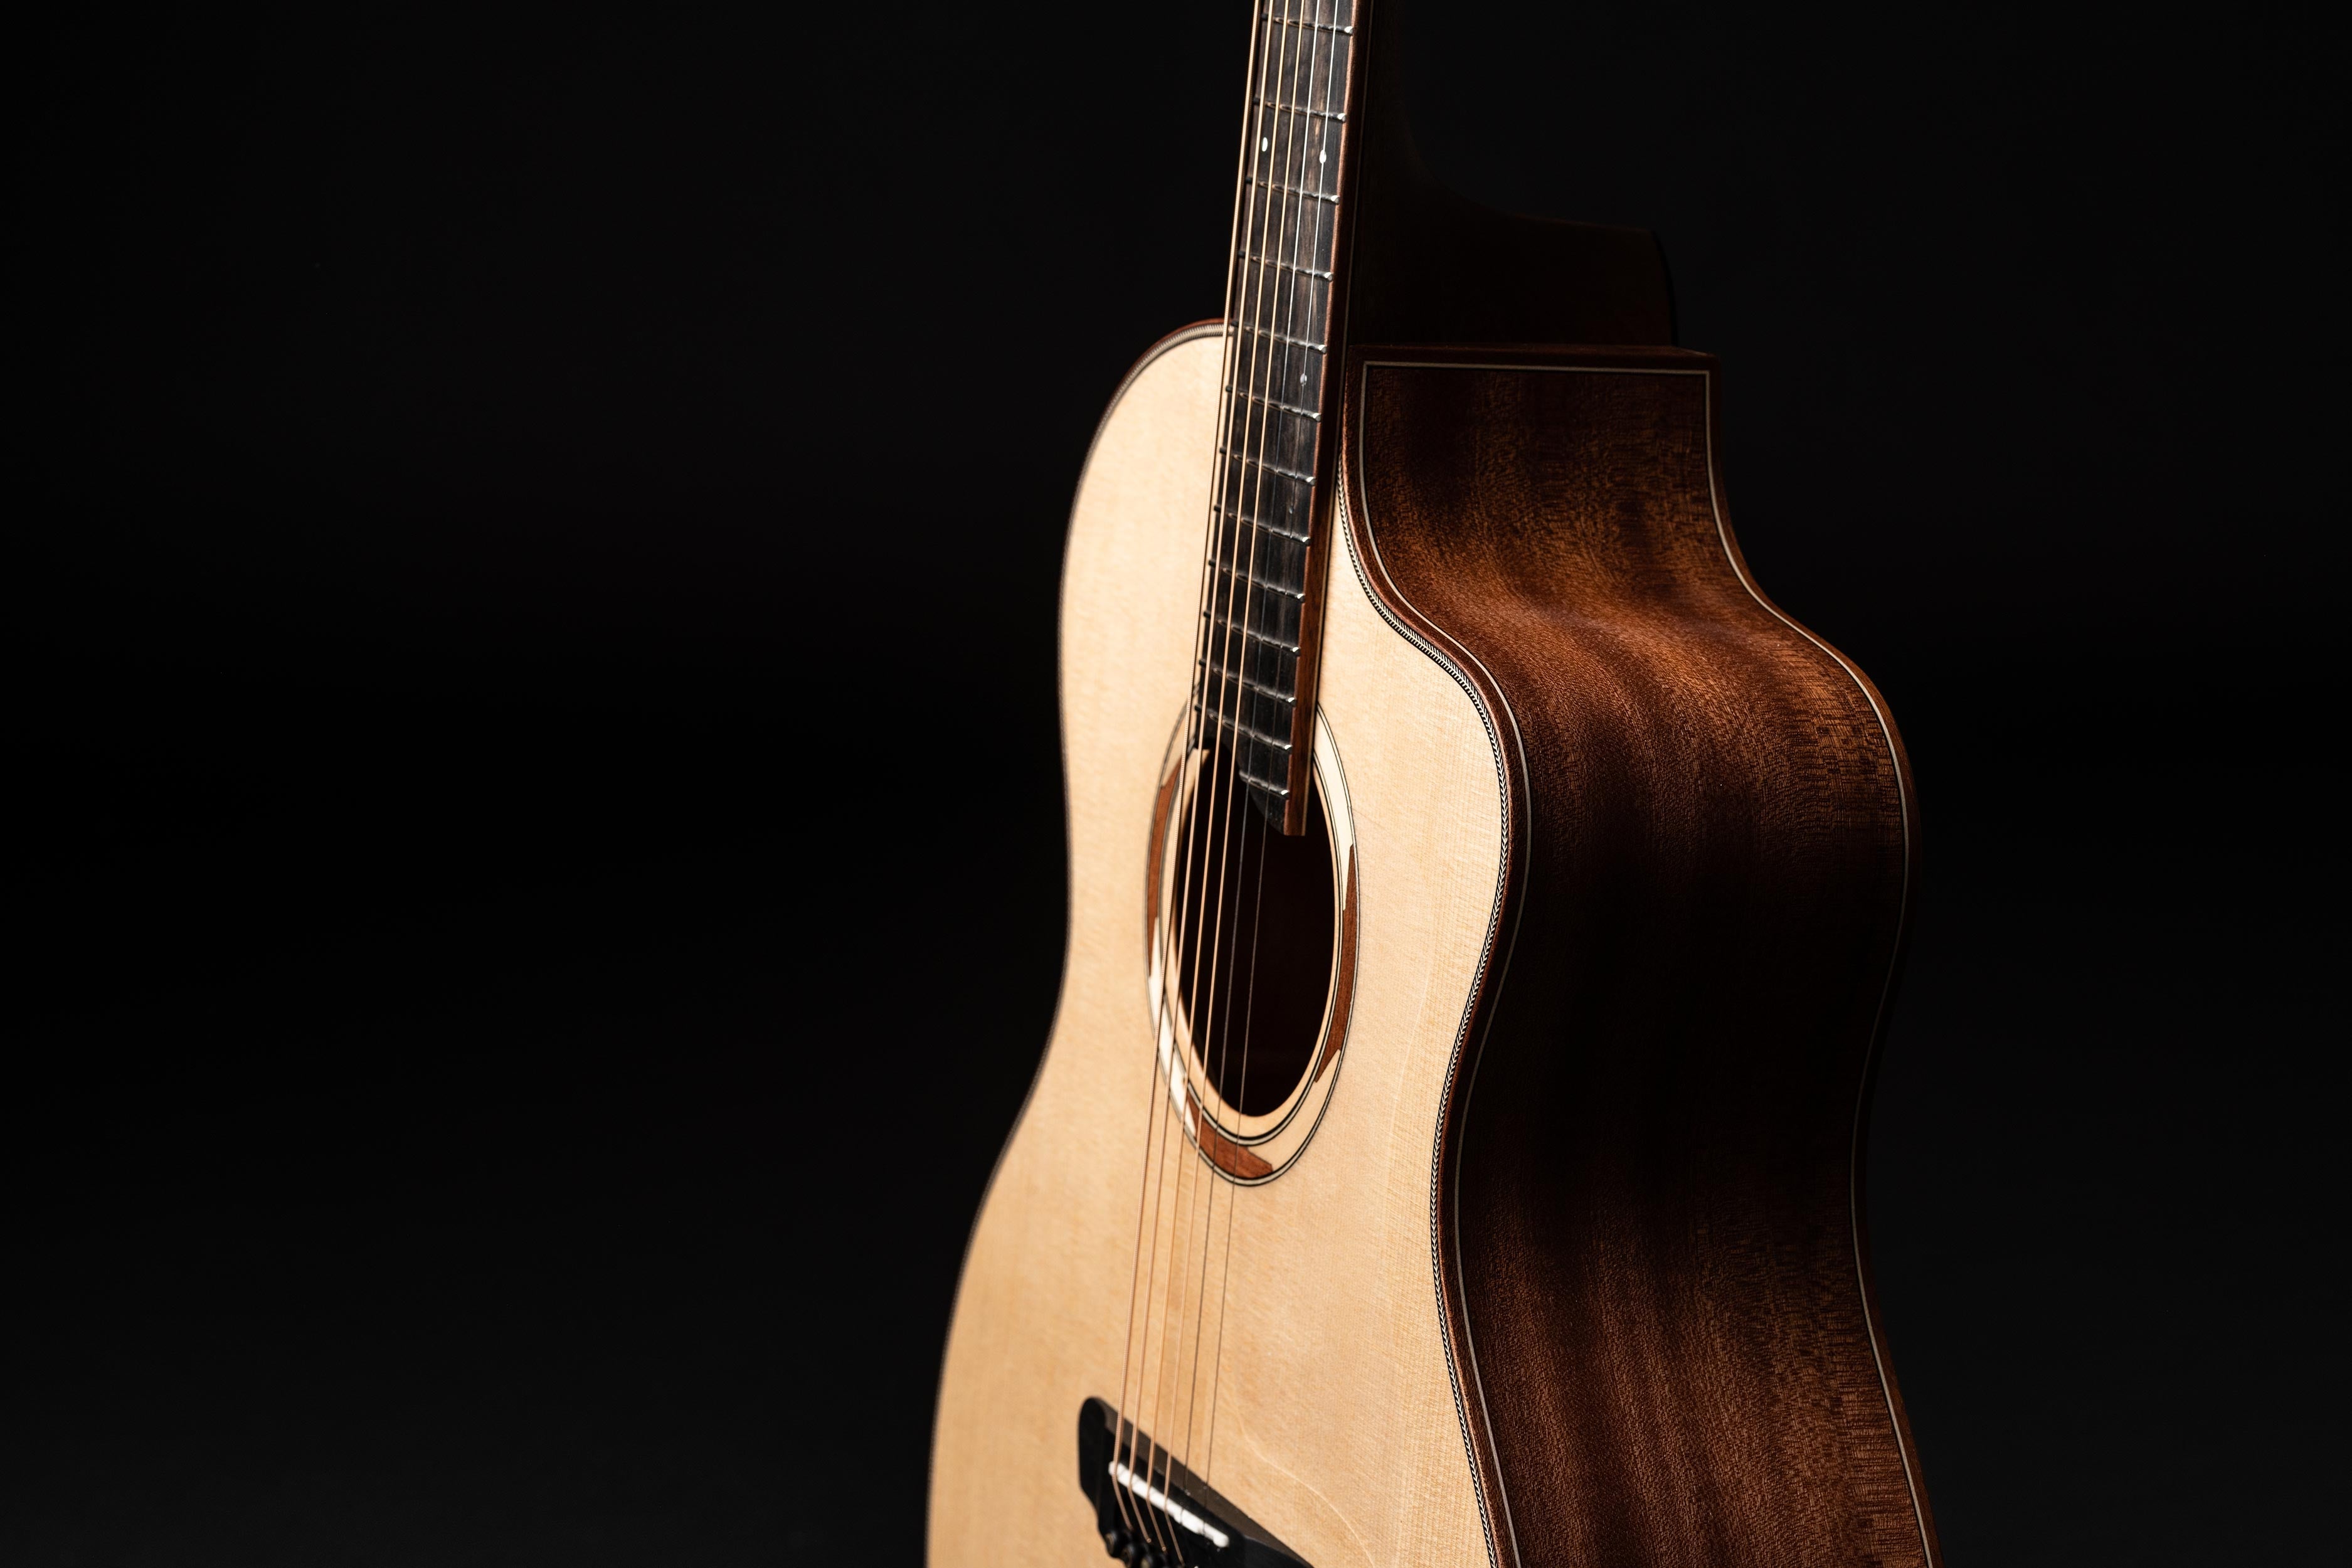 Dowina Mahogany (Pomona) GA, Acoustic Guitar for sale at Richards Guitars.